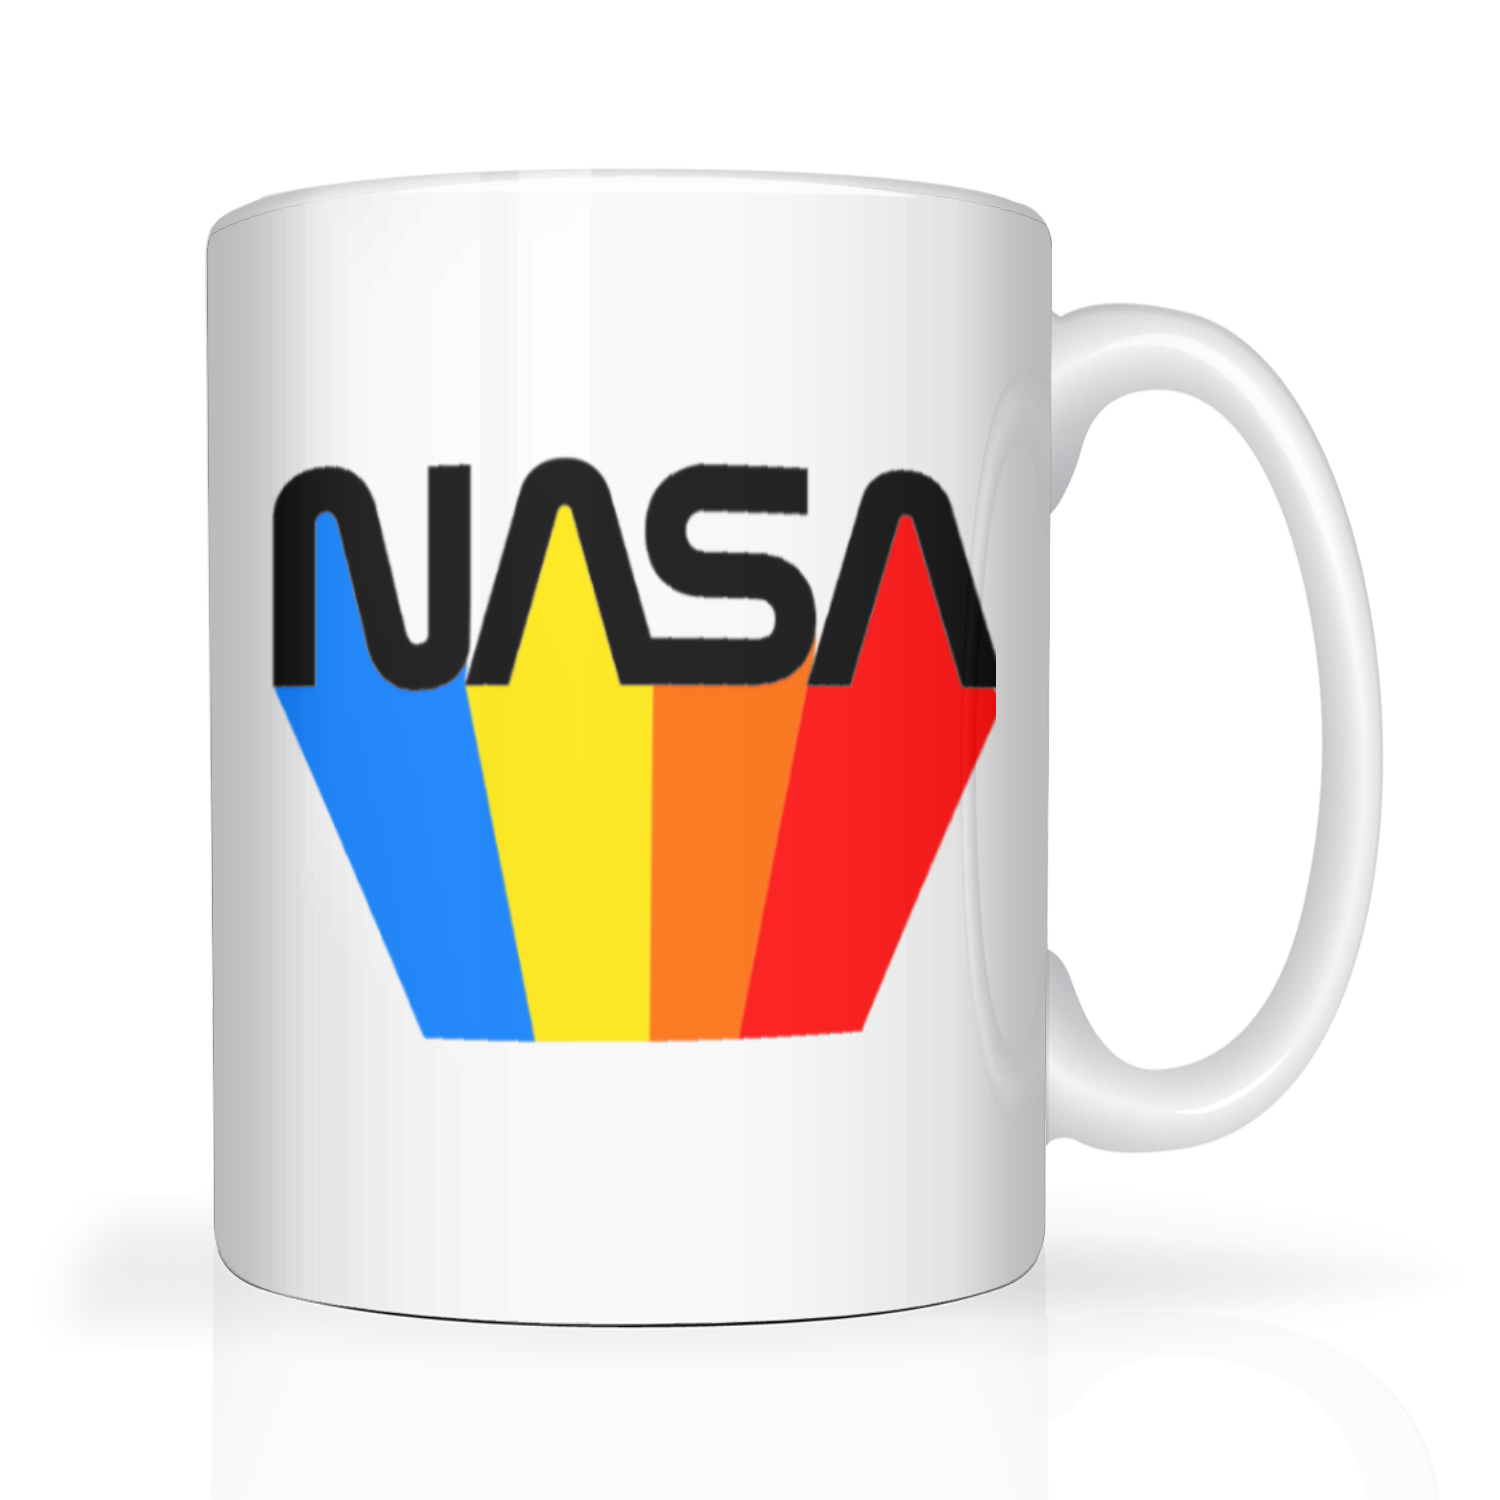 NASA 80’s Retro 2 Tone 15oz Mug